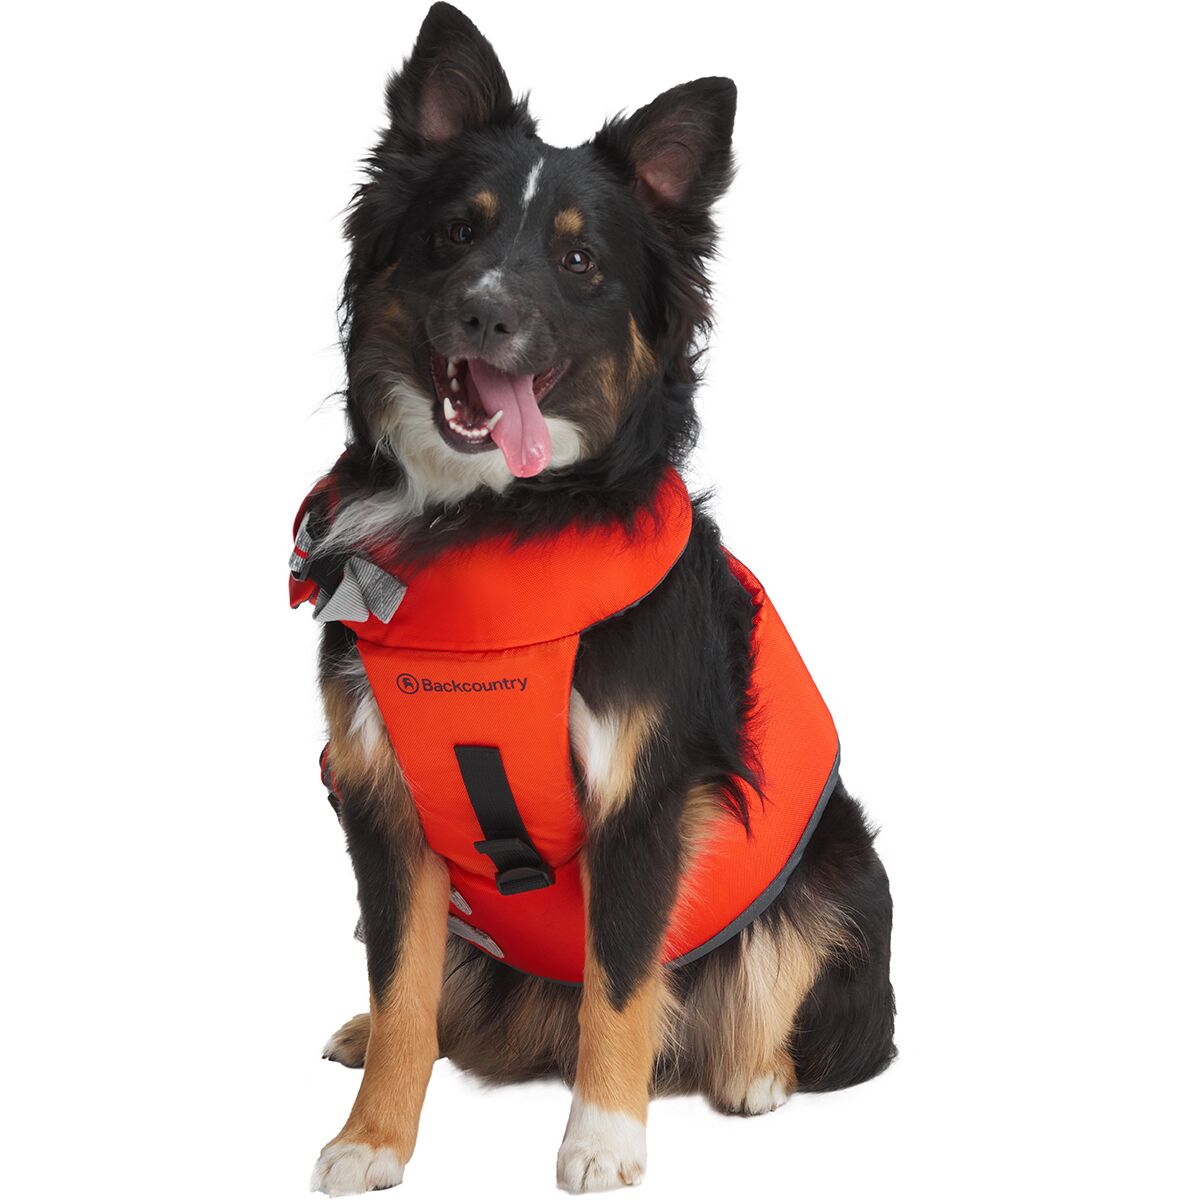 Backcountry x Petco The Dog Flotation Vest